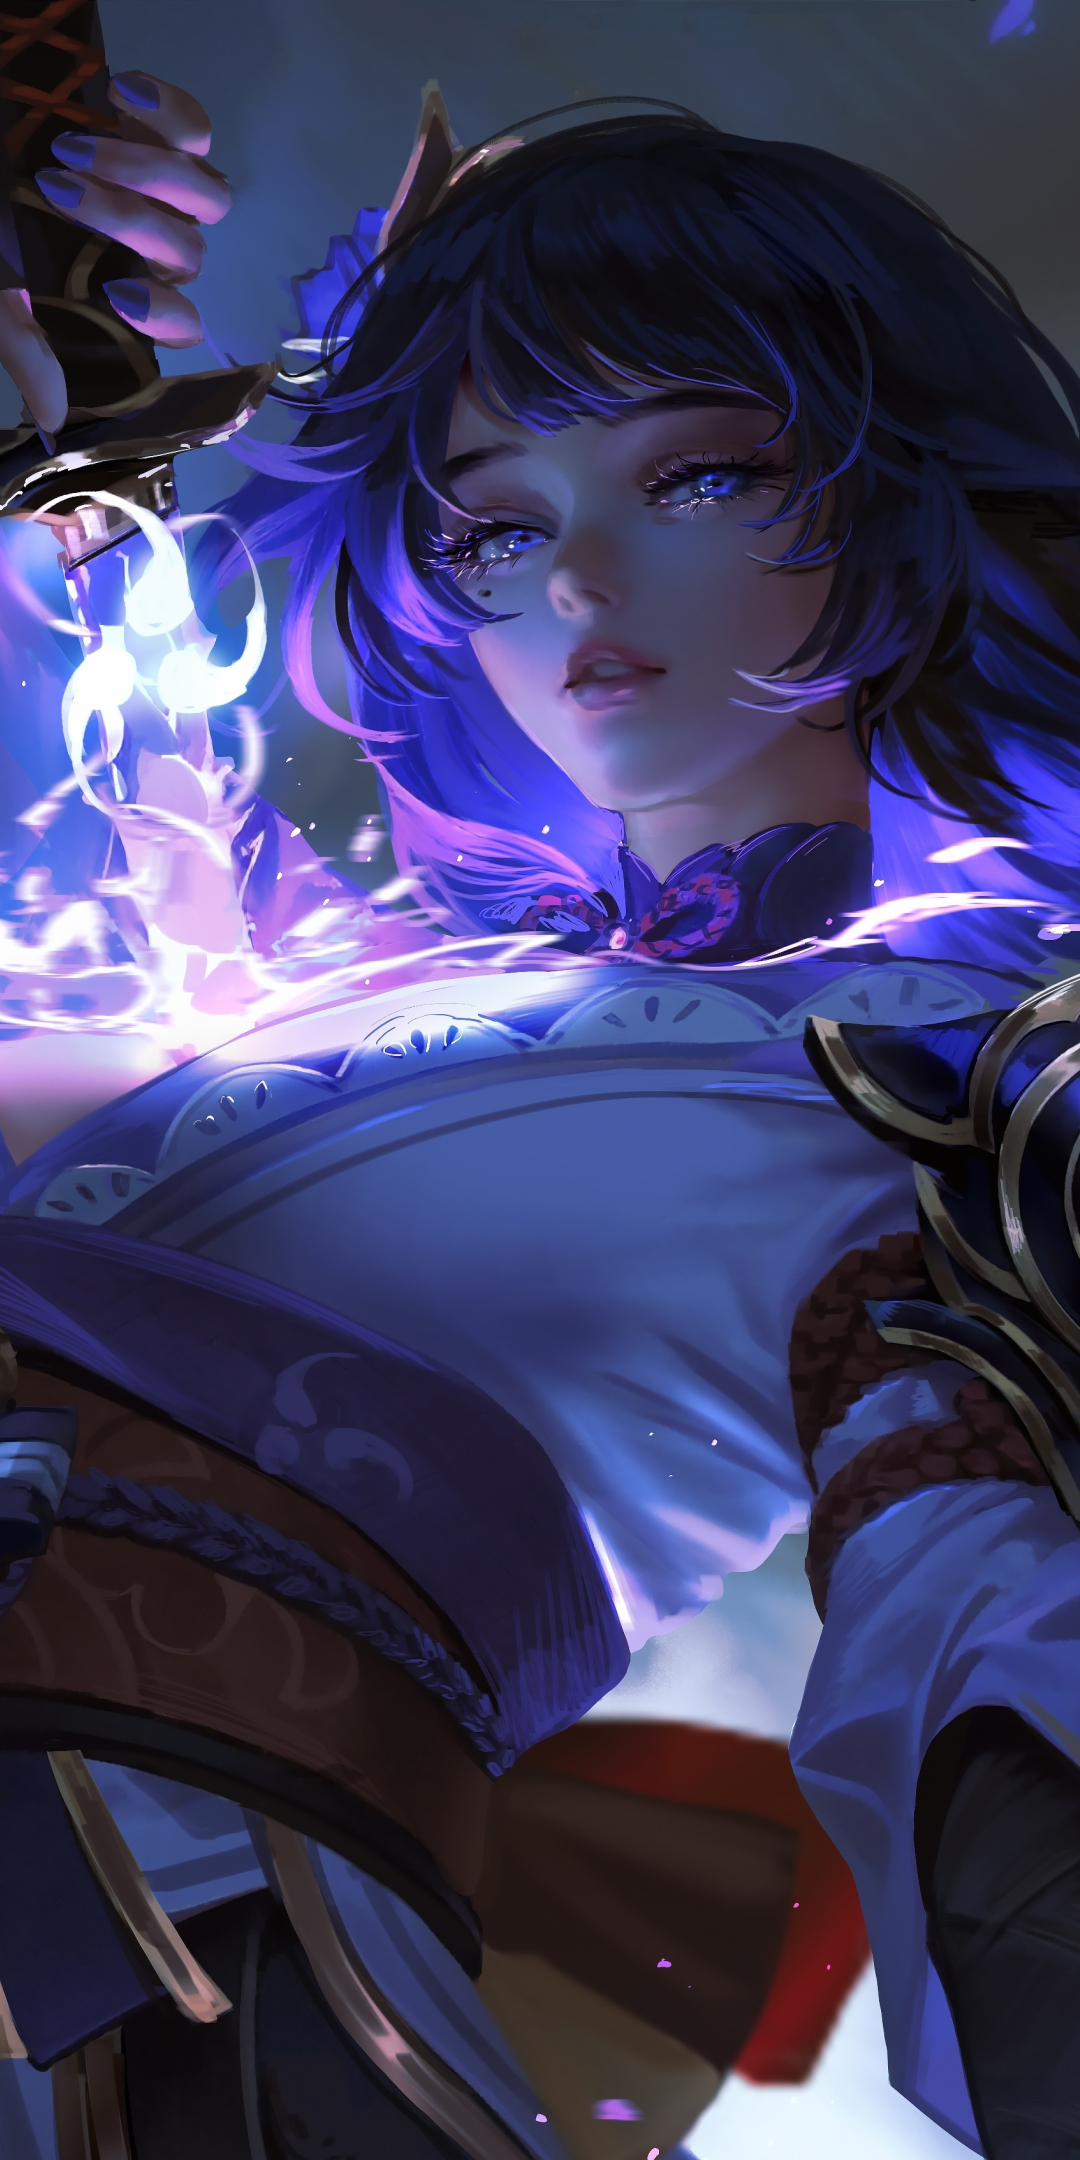 Cute girl with blue sword, fantasy, art, 1080x2160 wallpaper